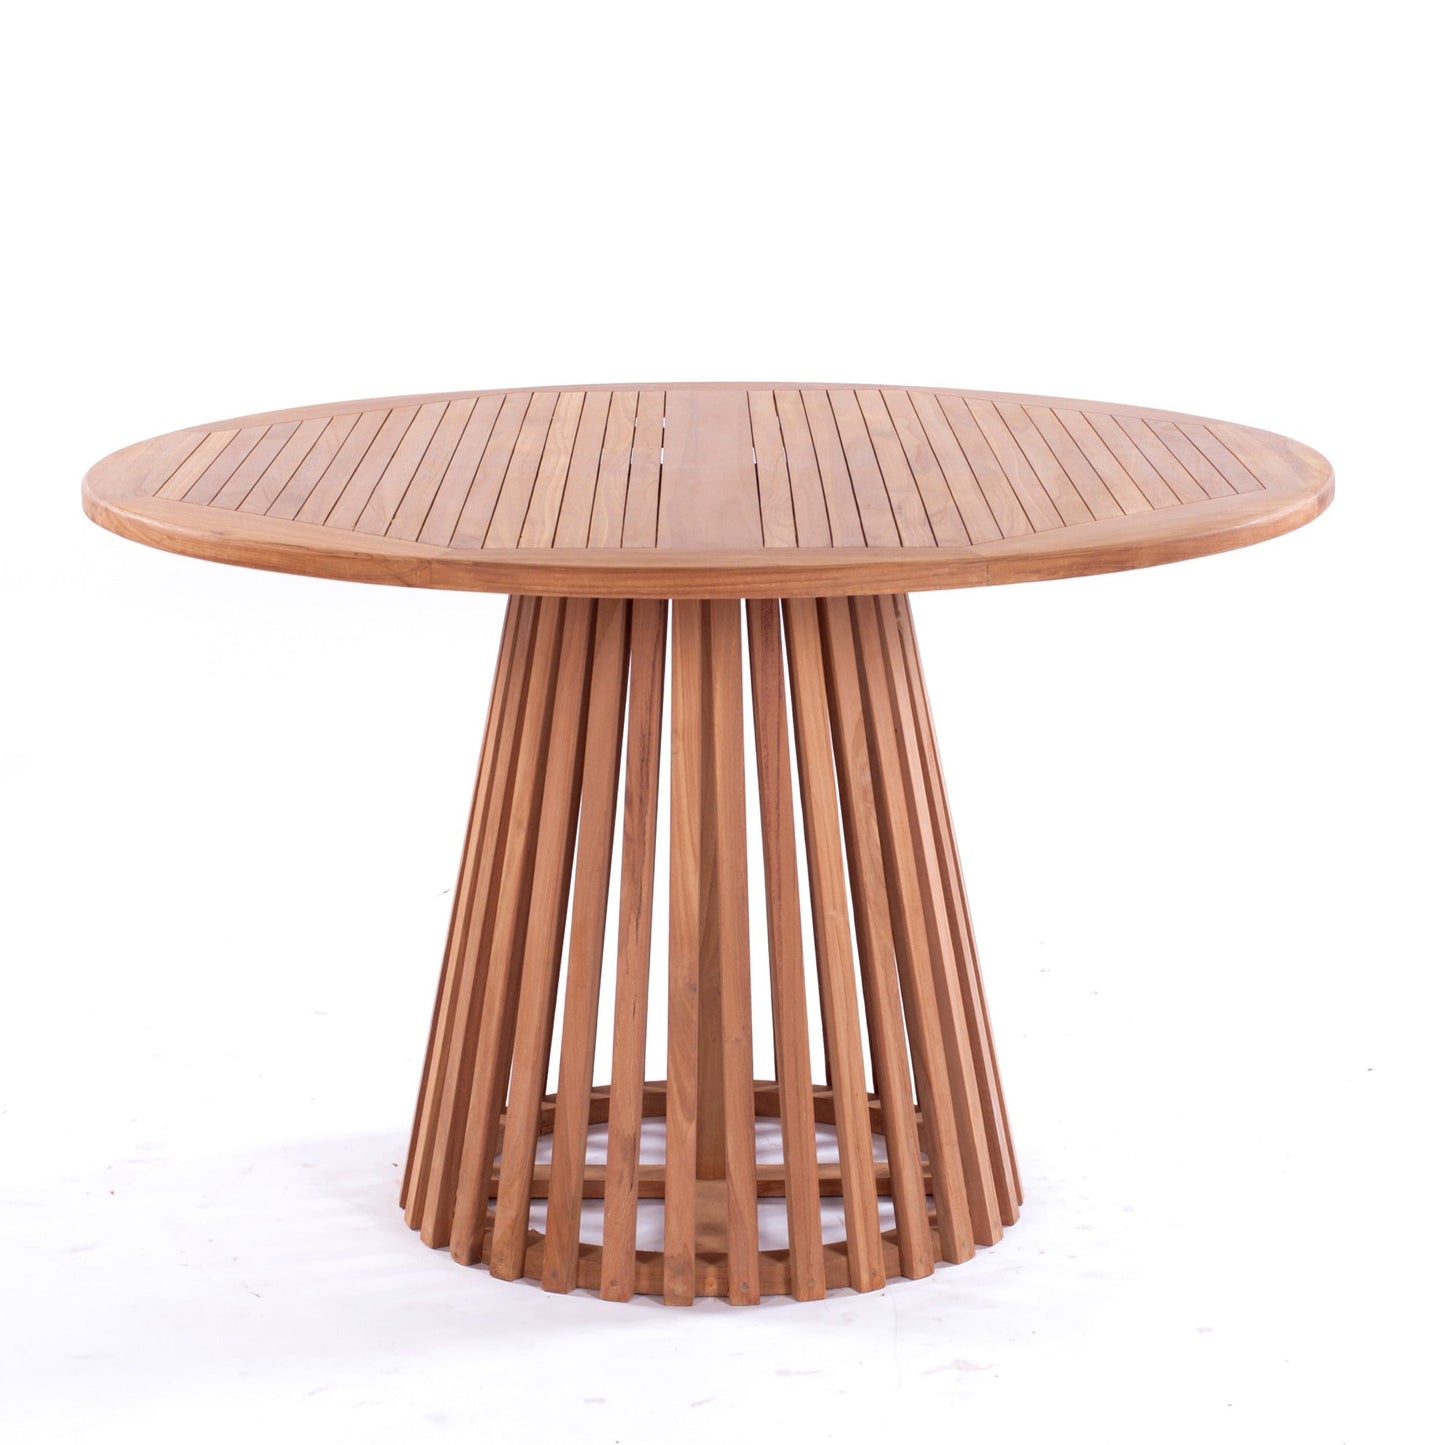 NUSA DUA + HÖLLVIKEN Outdoor Dining Set | Teak Wood Dining Round Table with 4 Armchairs